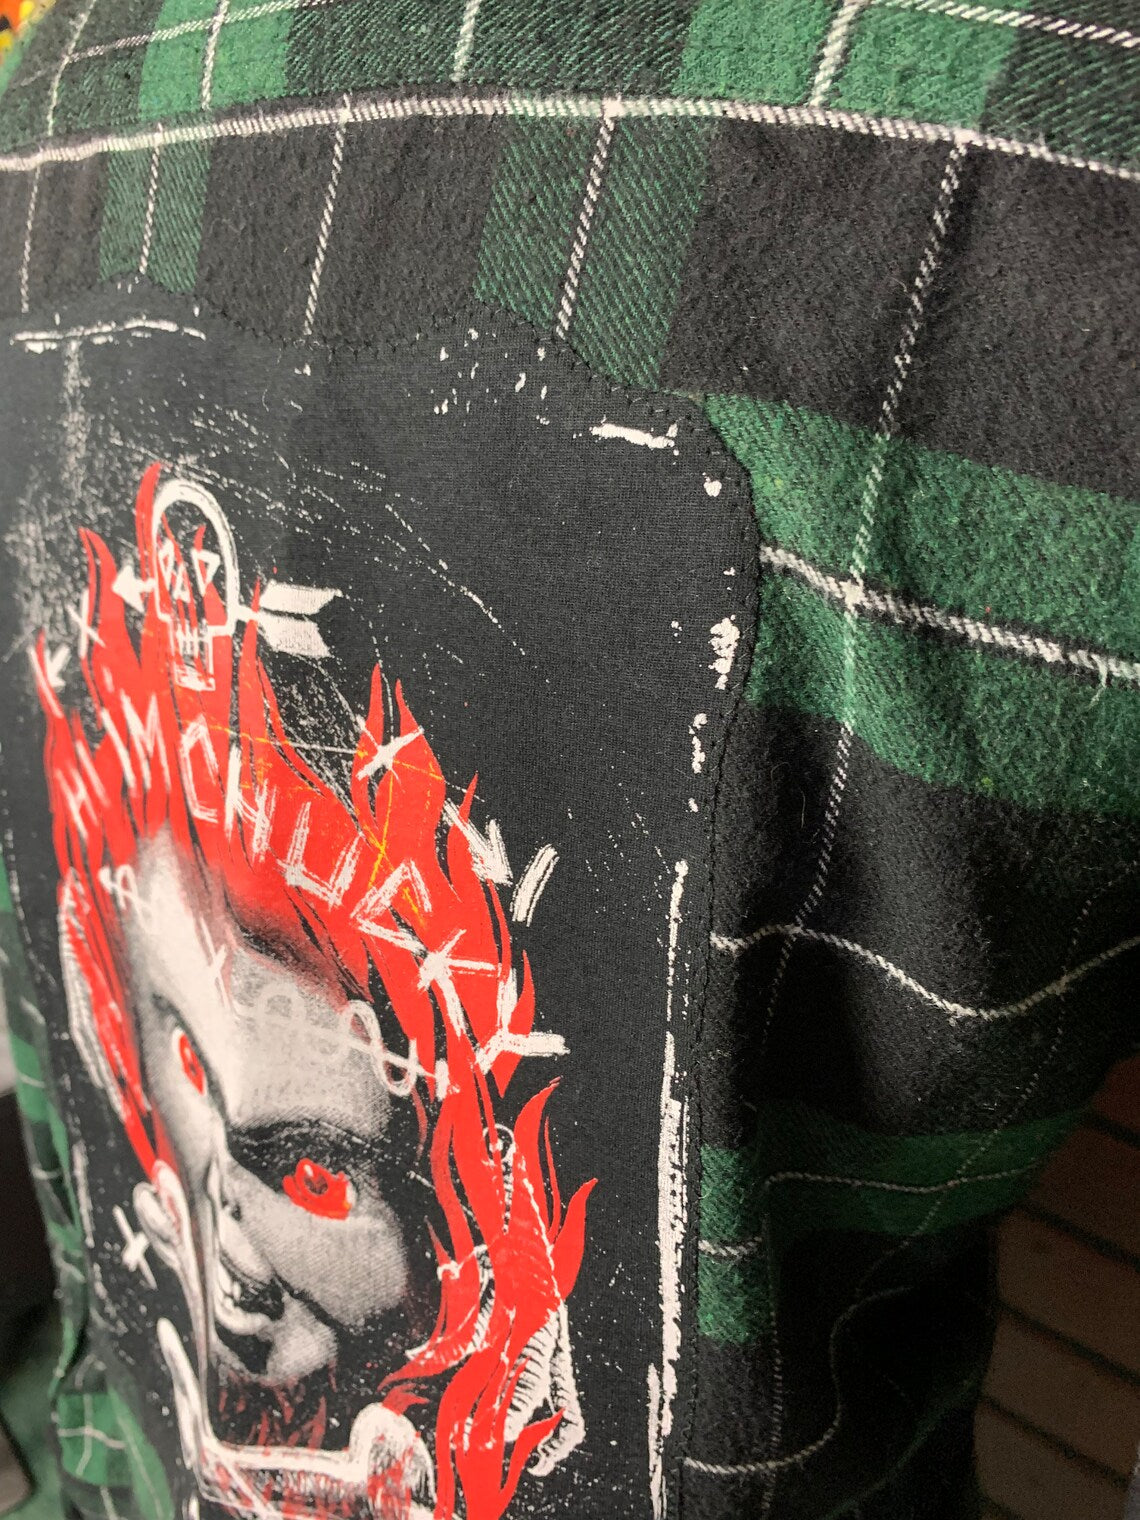 Chucky Flannel Shirt Custom Rework L